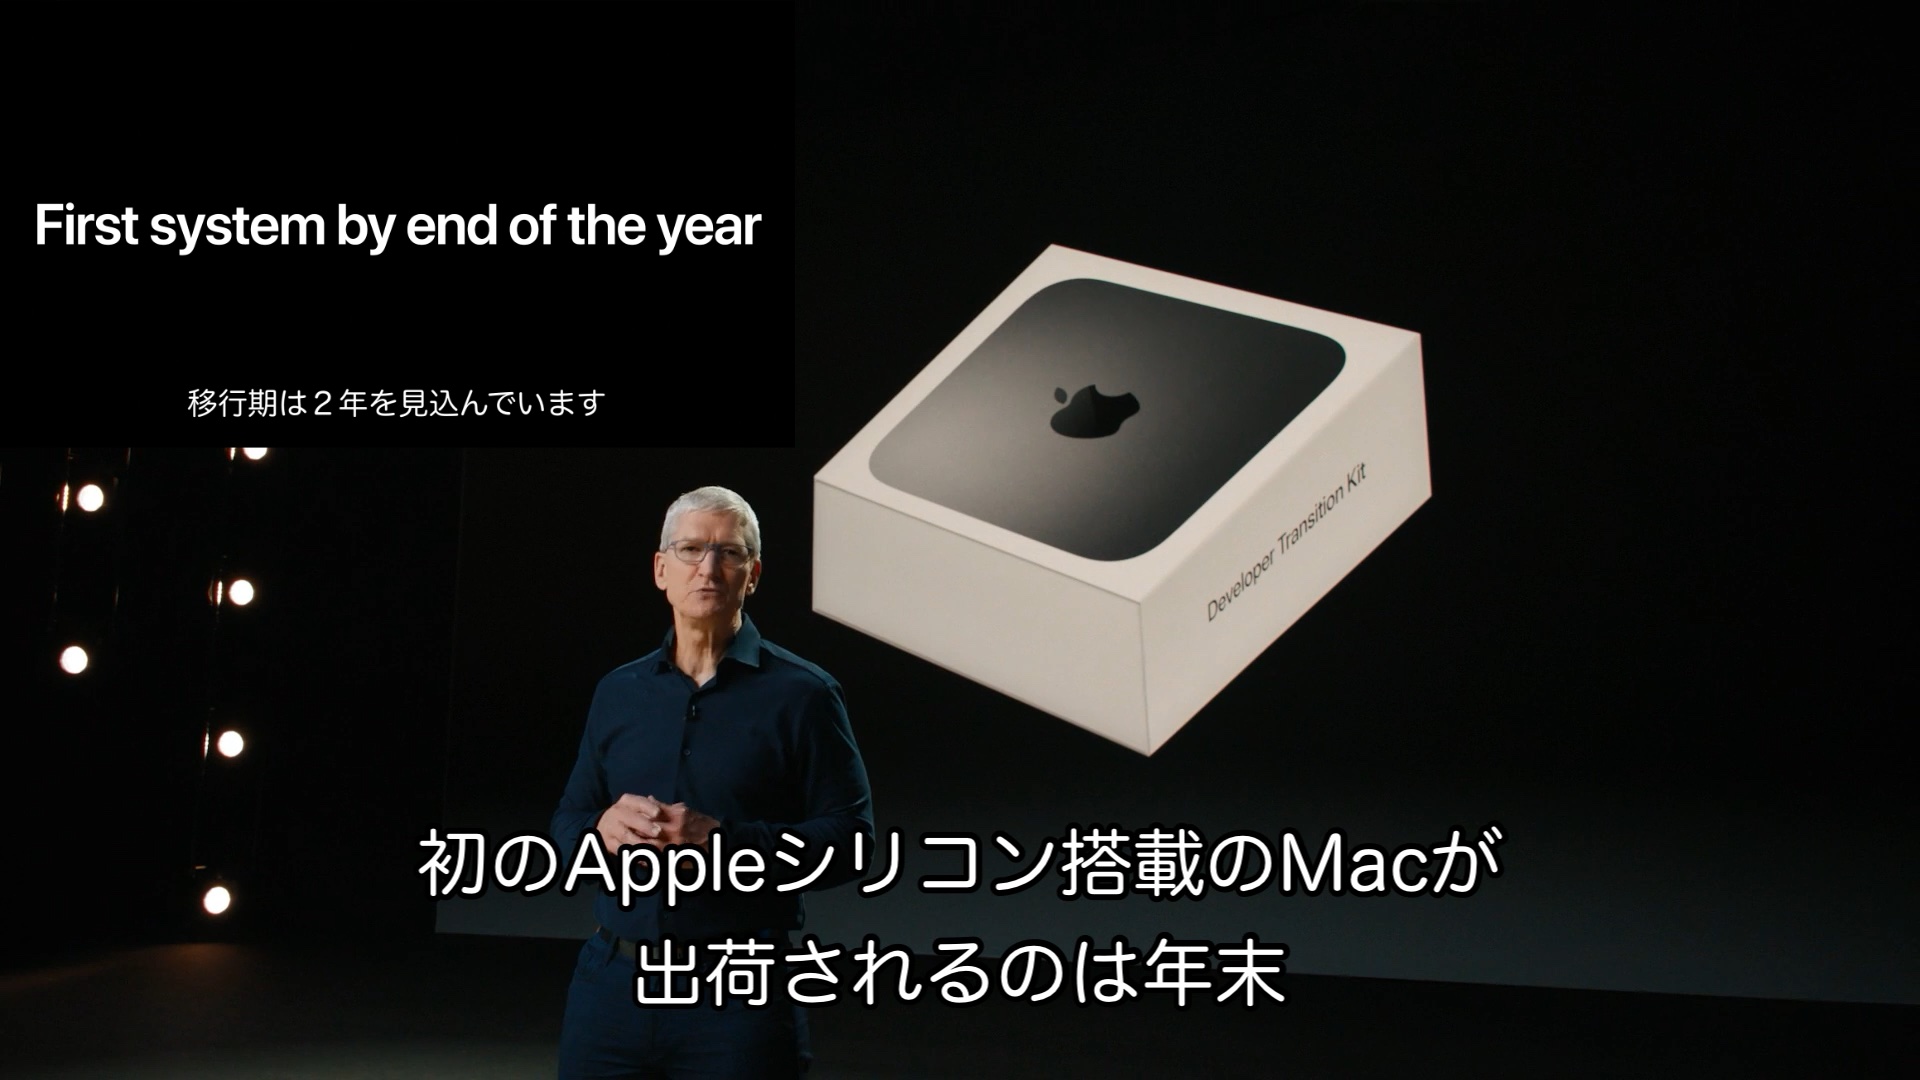 Apple Silicon Macは2020年末に発売